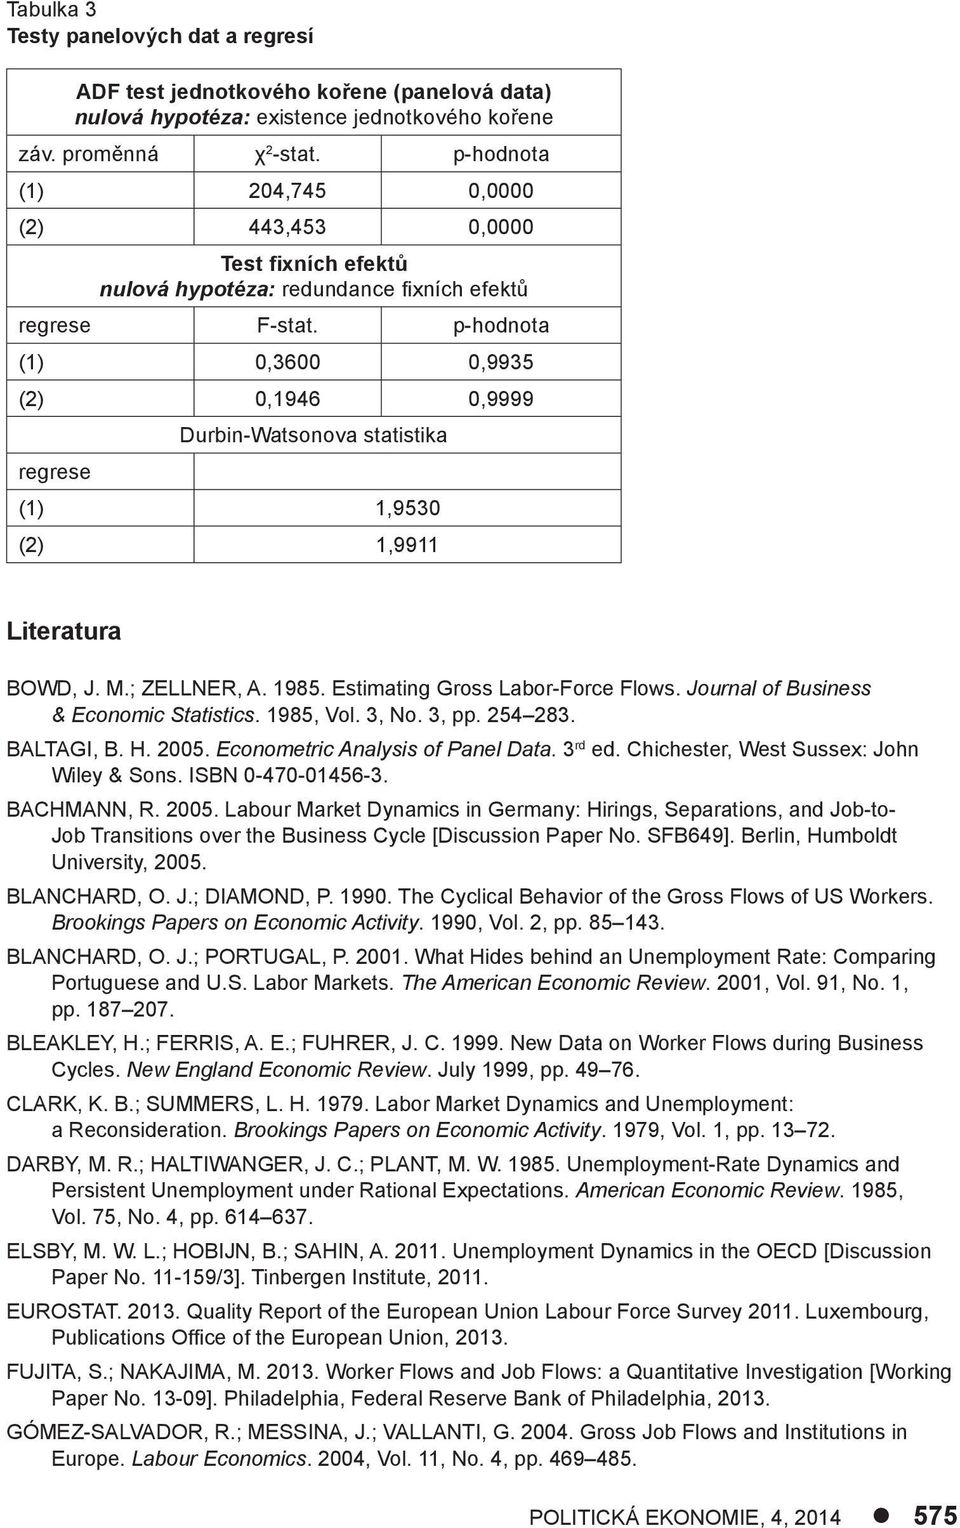 p-hodnoa (1) 0,3600 0,9935 (2) 0,1946 0,9999 Durbin-Wasonova saisika regrese (1) 1,9530 (2) 1,9911 Lieraura BOWD, J. M.; ZELLNER, A. 1985. Esimaing Gross Labor-Force Flows.